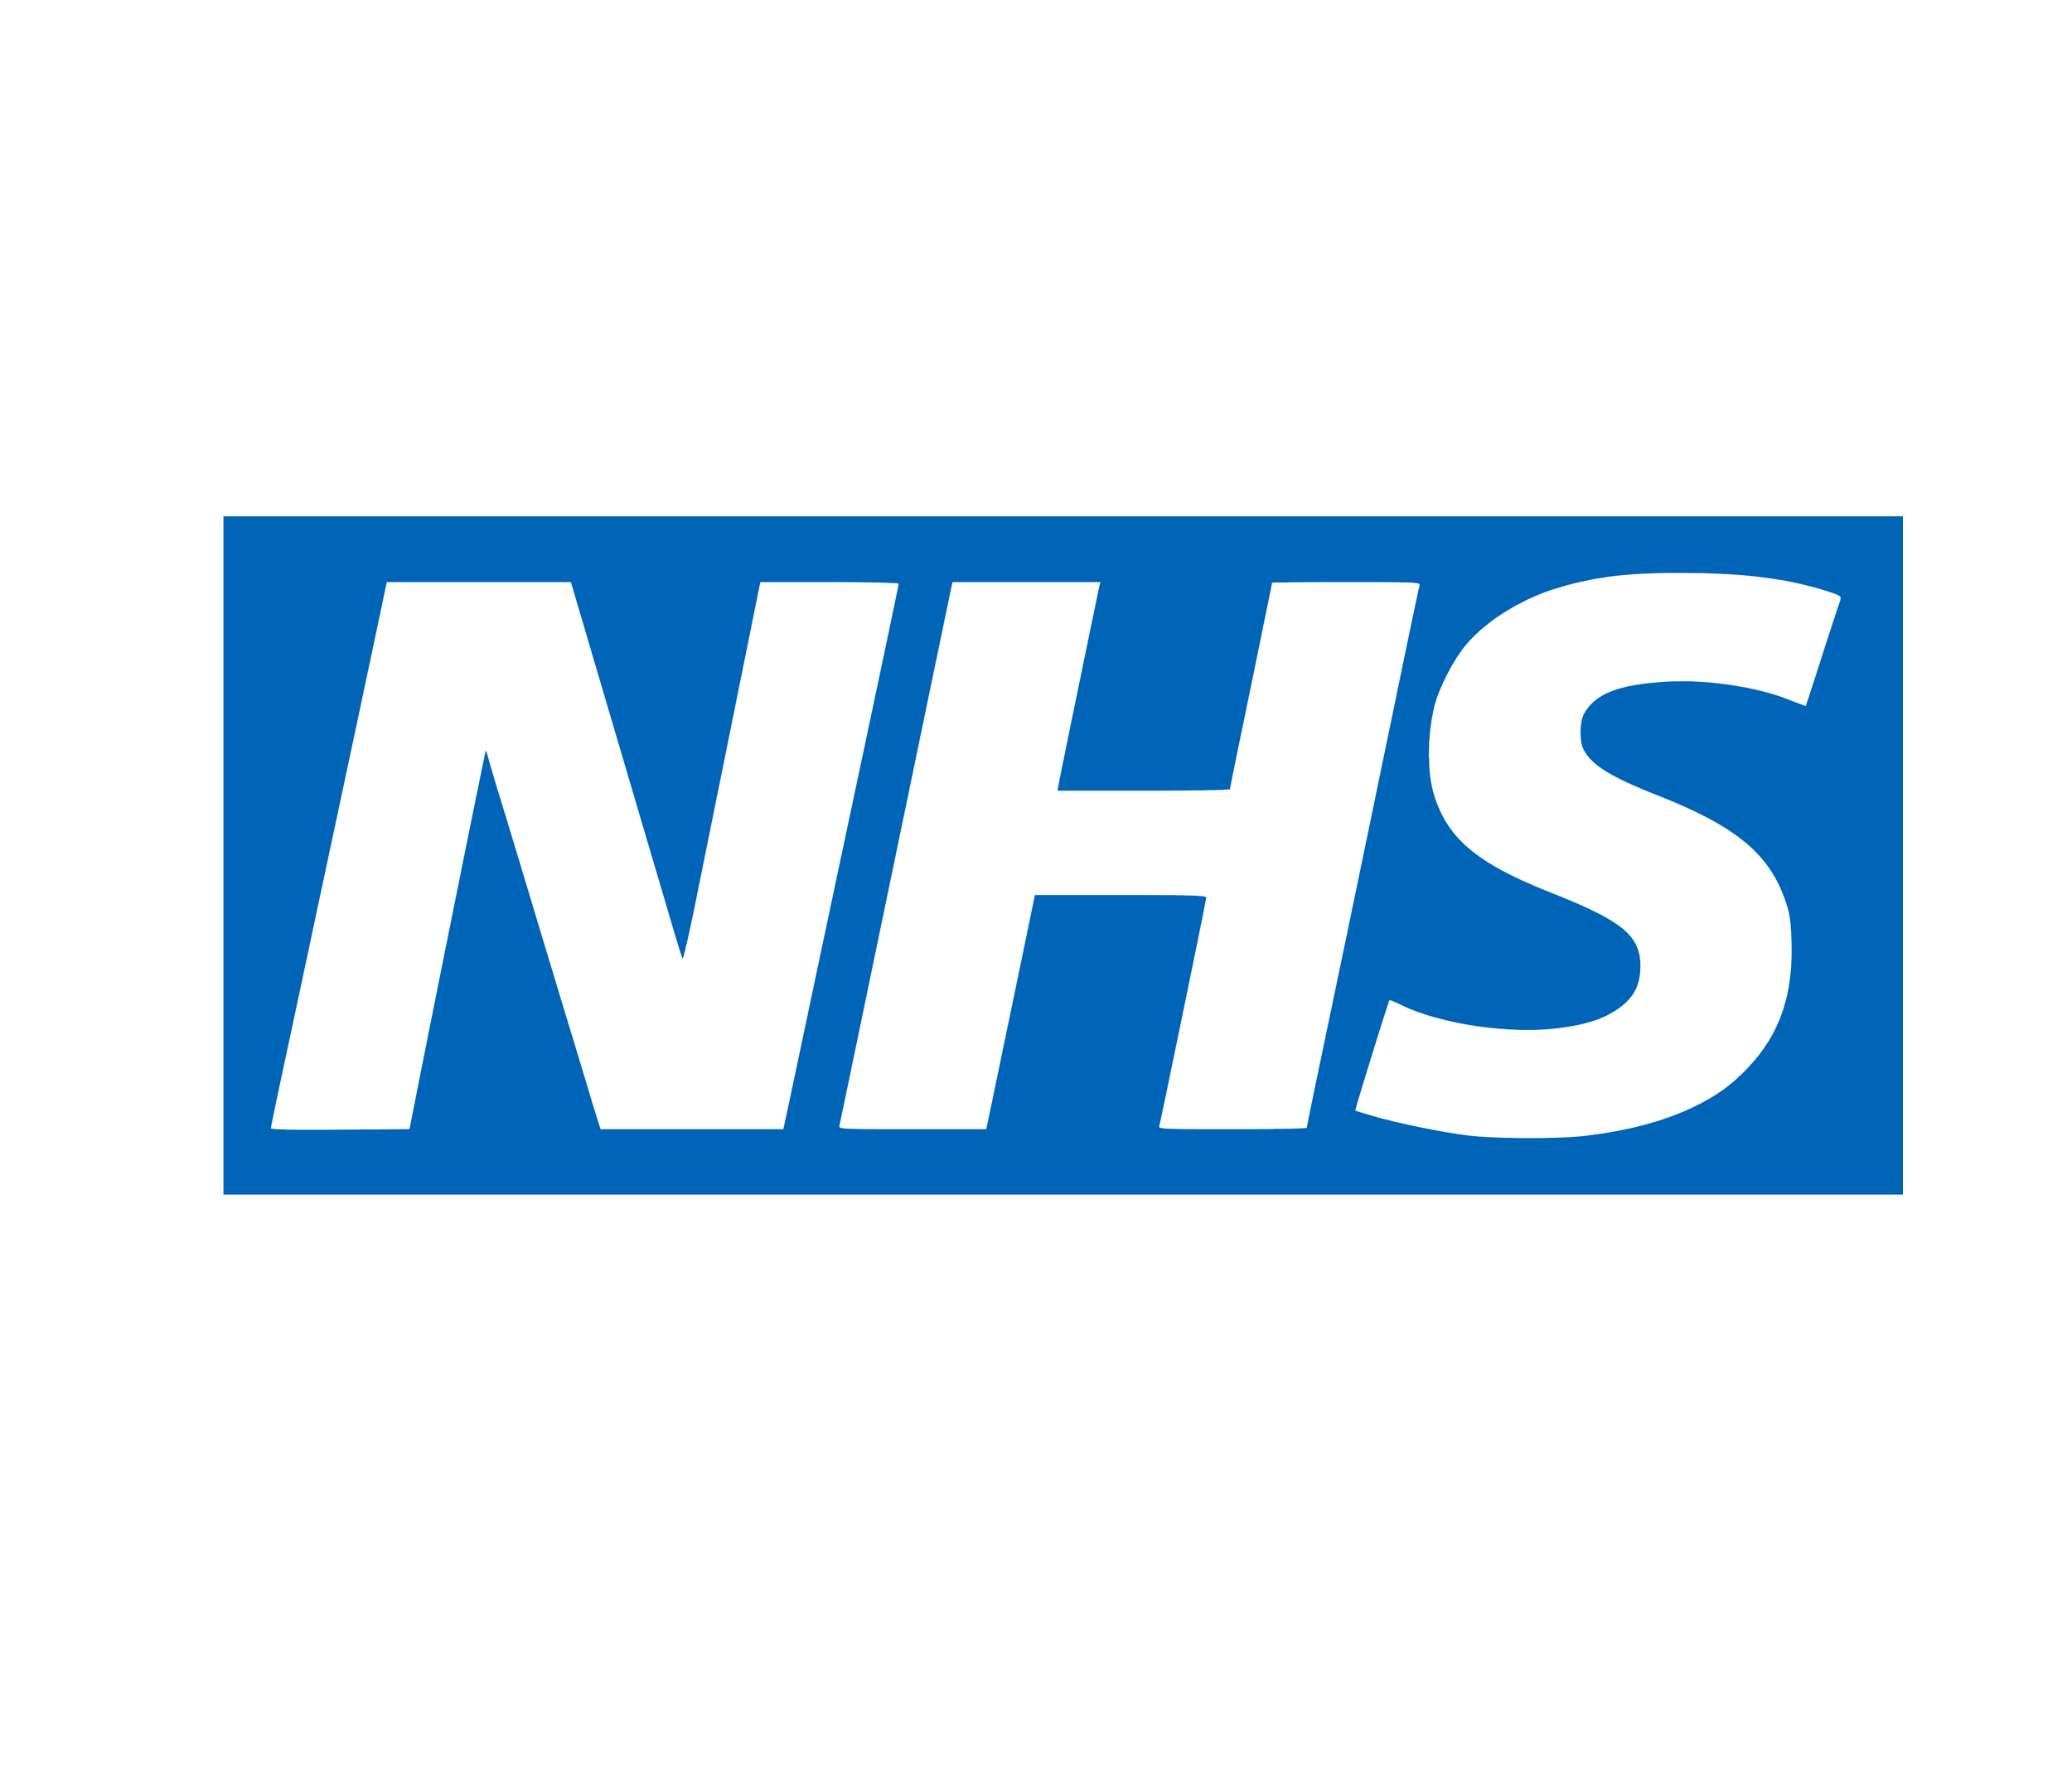 NHS-logo.png